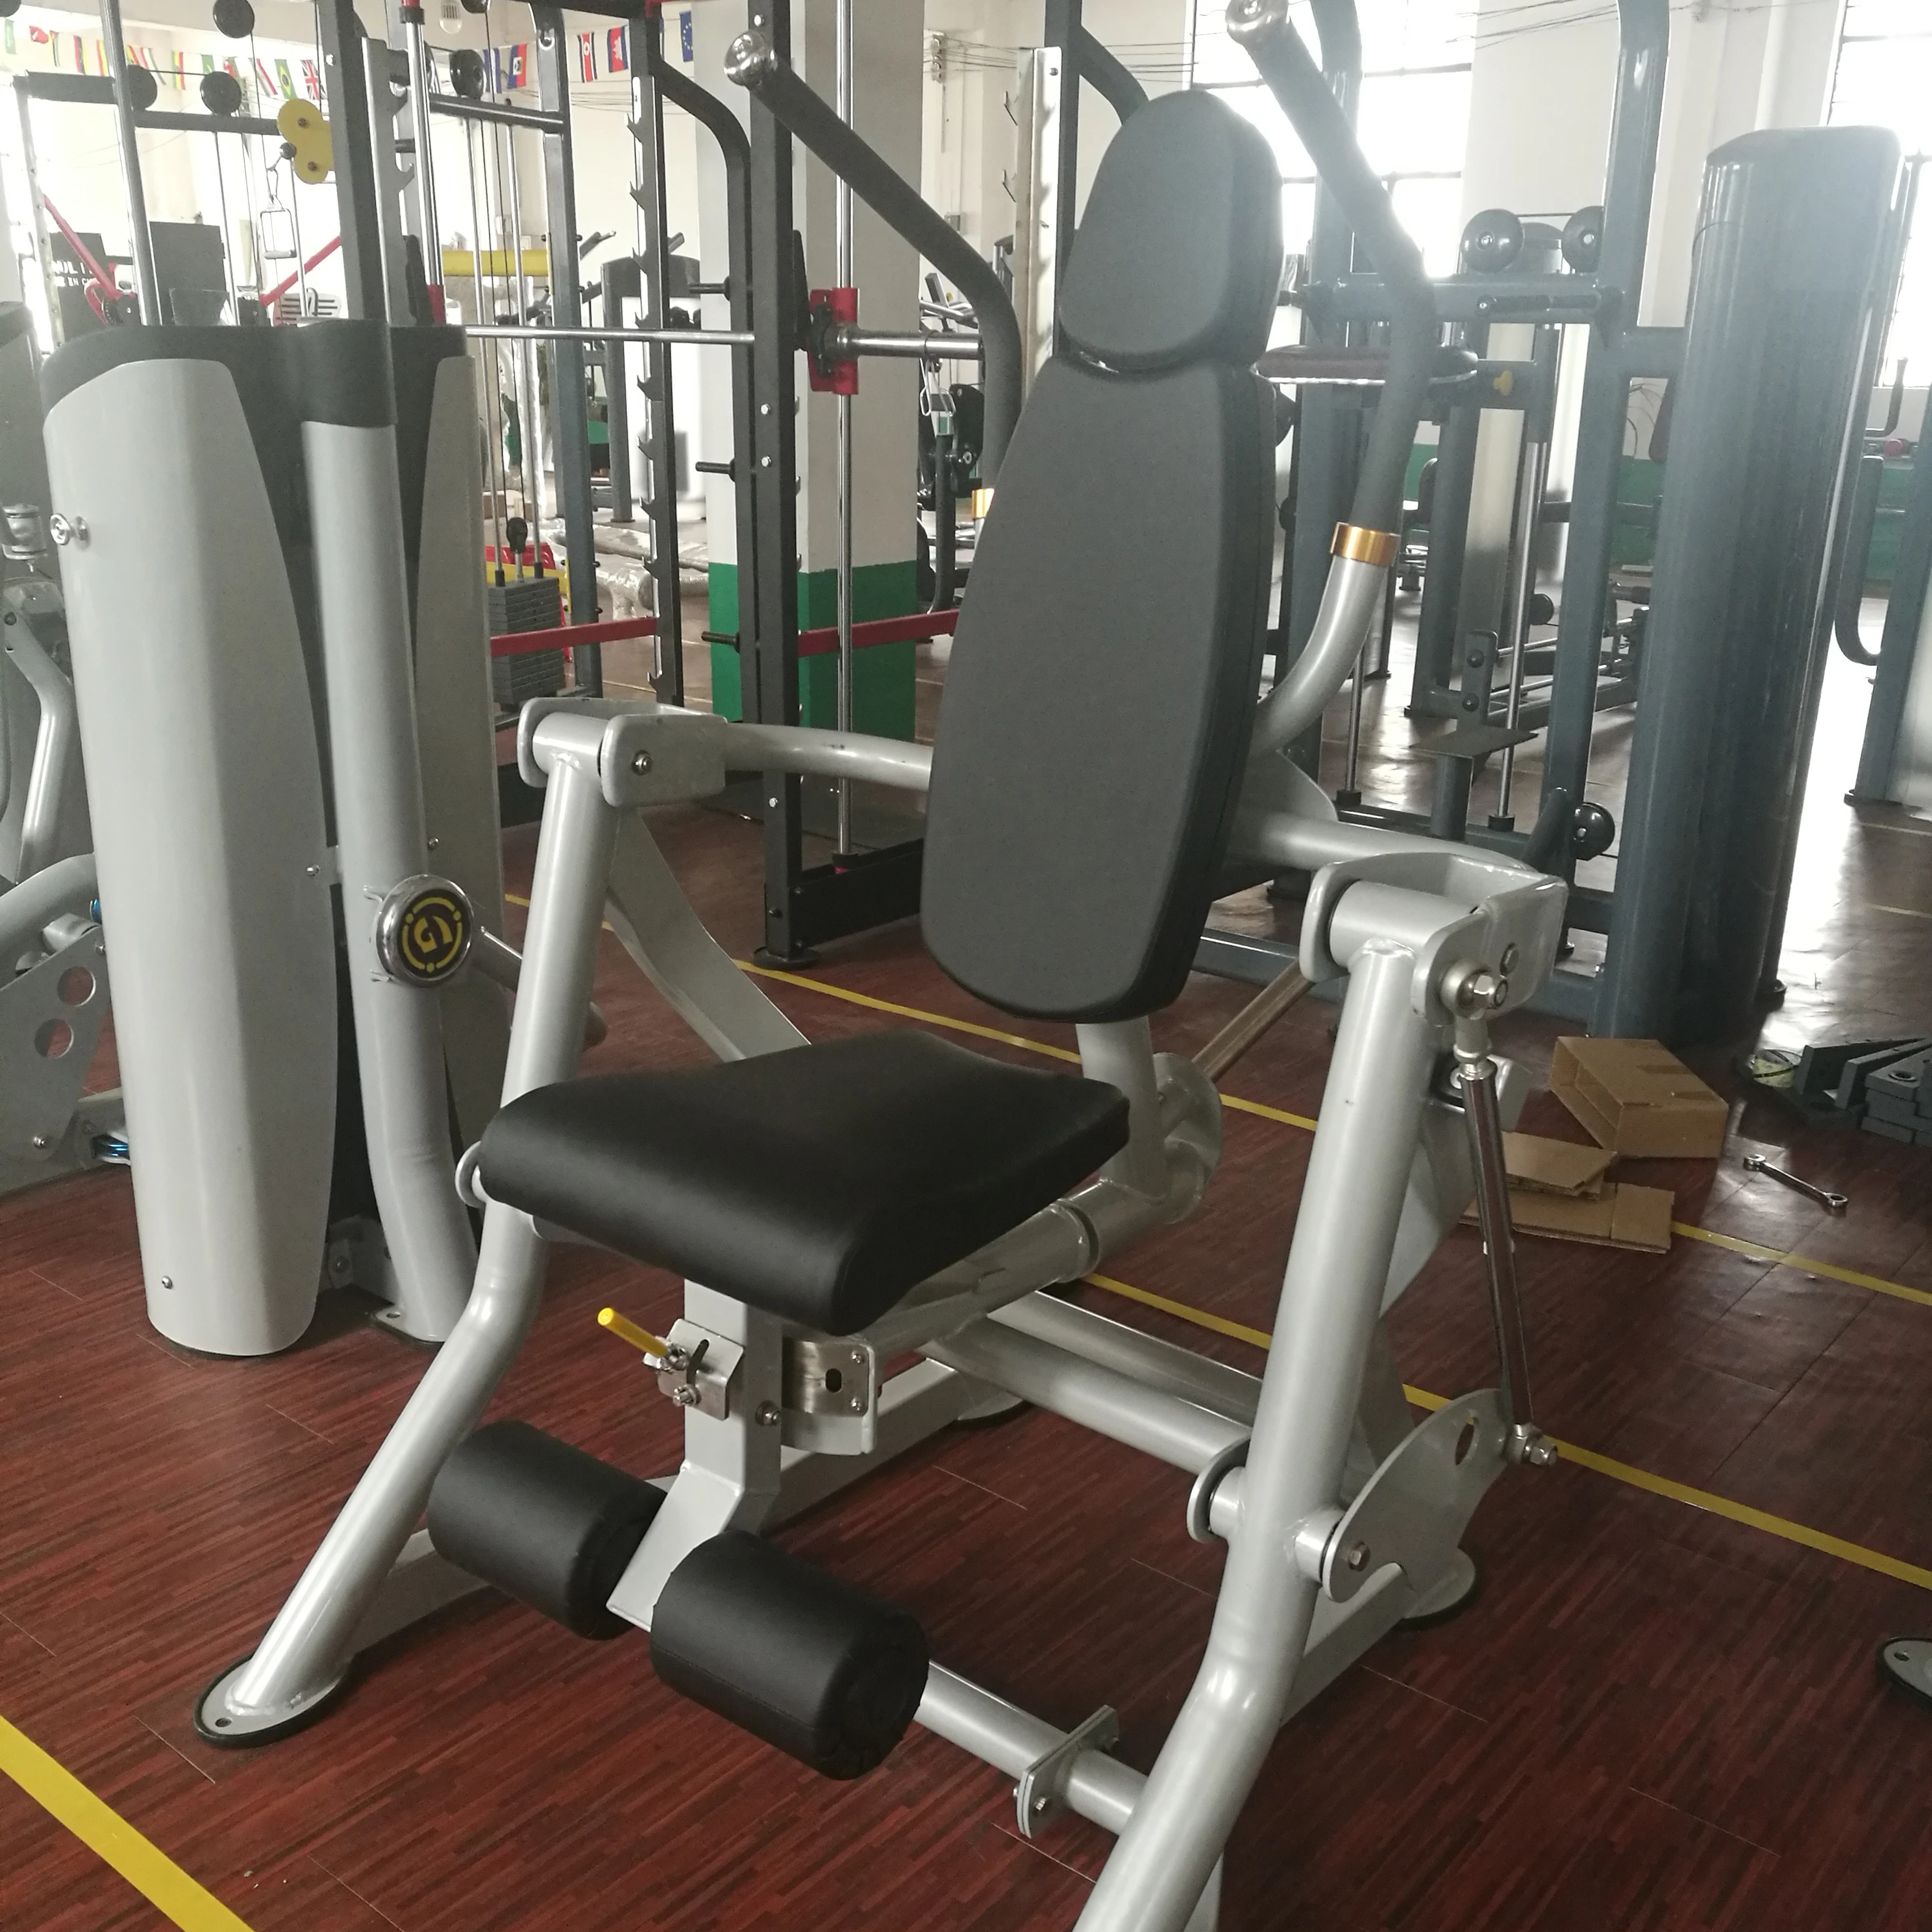 

Hot Sale Fitness Gym Trainer Isolator Abdominal Machine